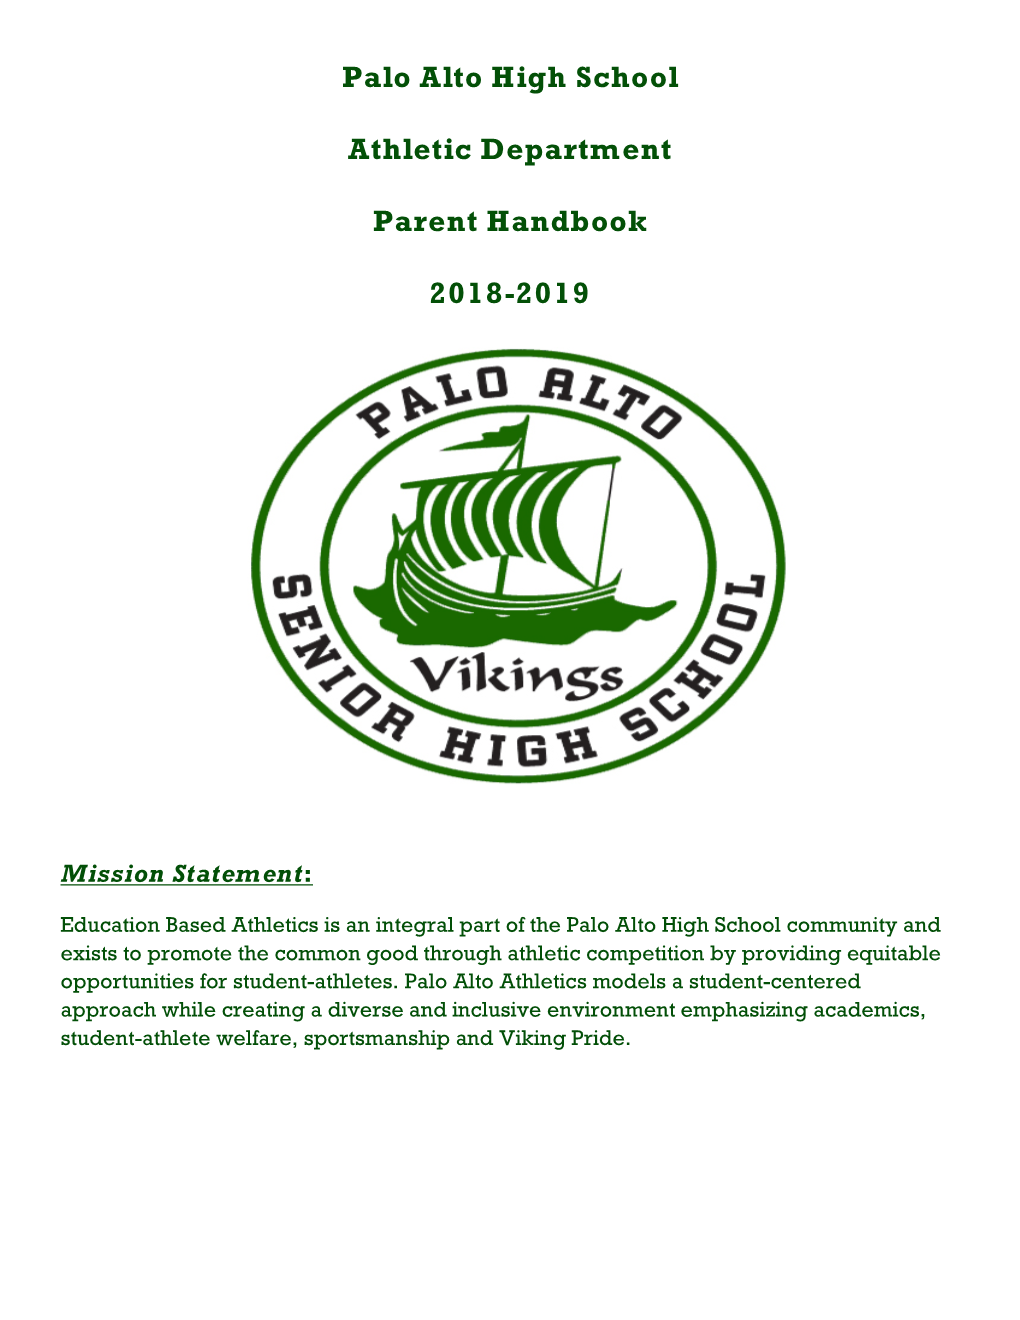 Palo Alto High School Athletic Department Parent Handbook 2018